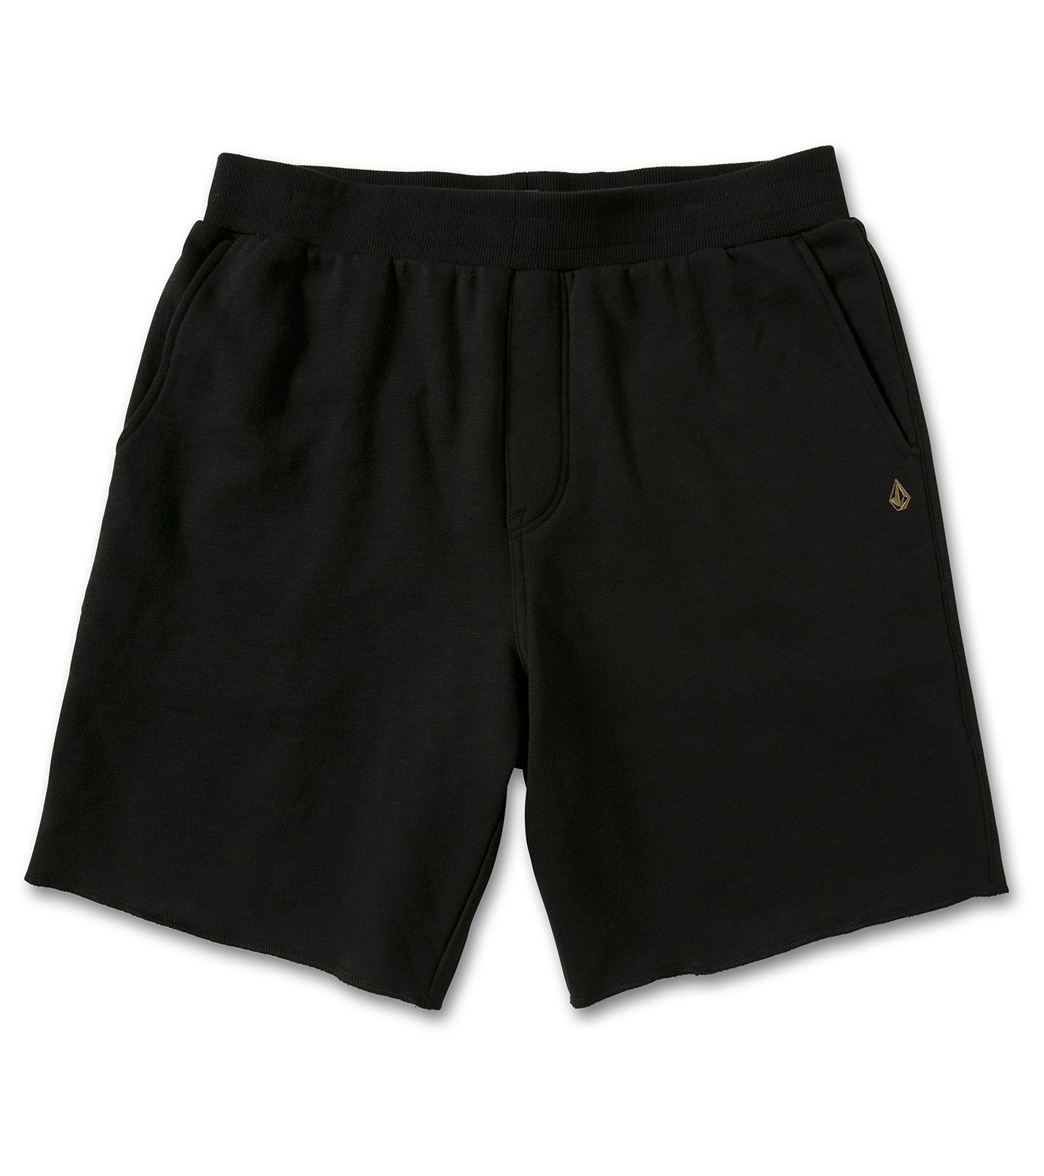 Volcom Men's Malach Short 20 Boardshorts - Black Large - Swimoutlet.com